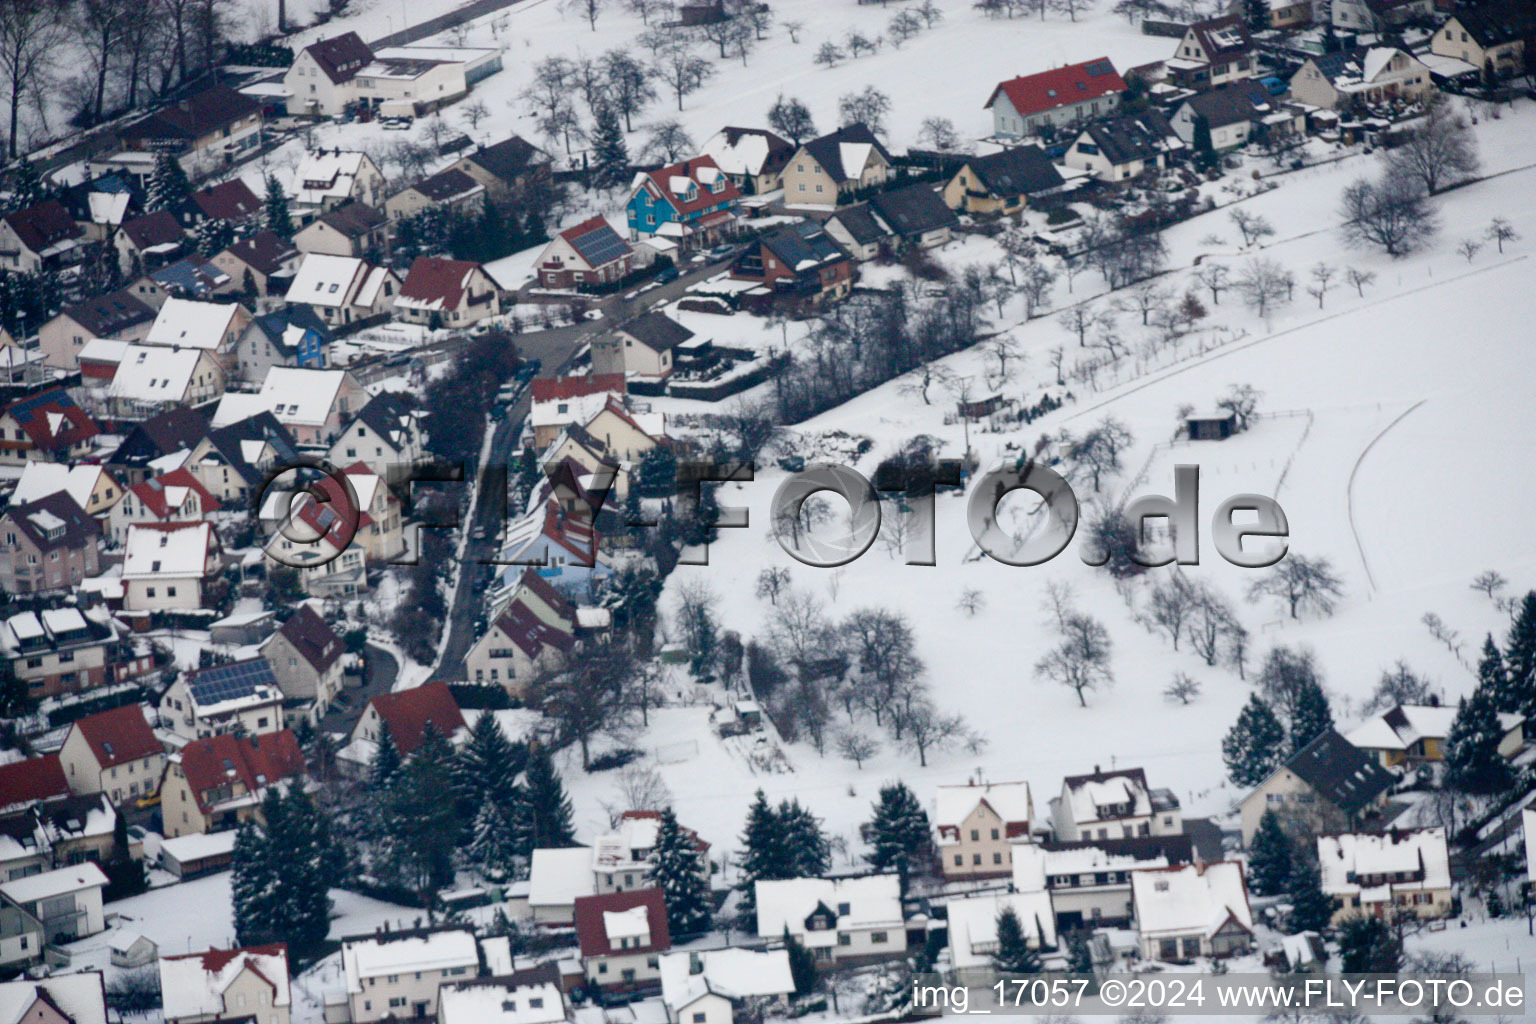 Wintry snowy Village view in the district Graefenhausen in Birkenfeld in the state Baden-Wurttemberg